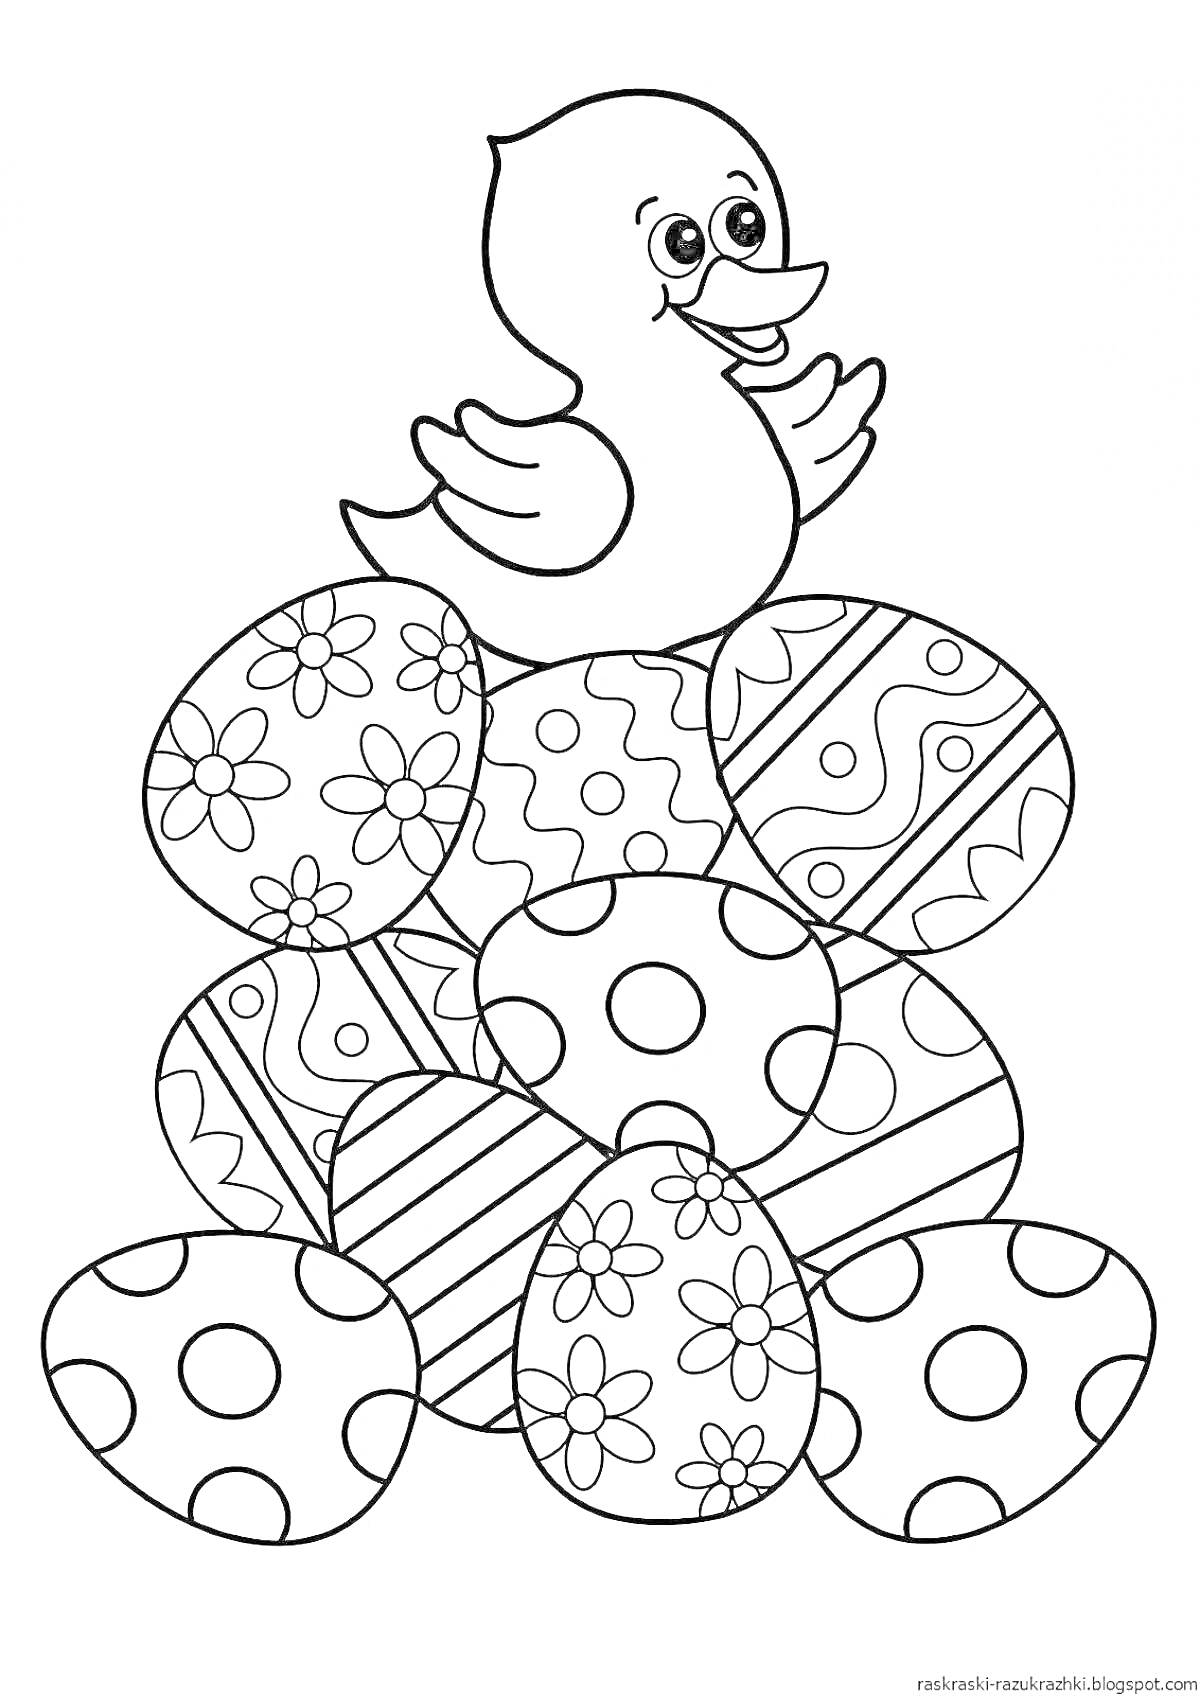 Раскраска Утёнок на пасхальных яйцах с узорами